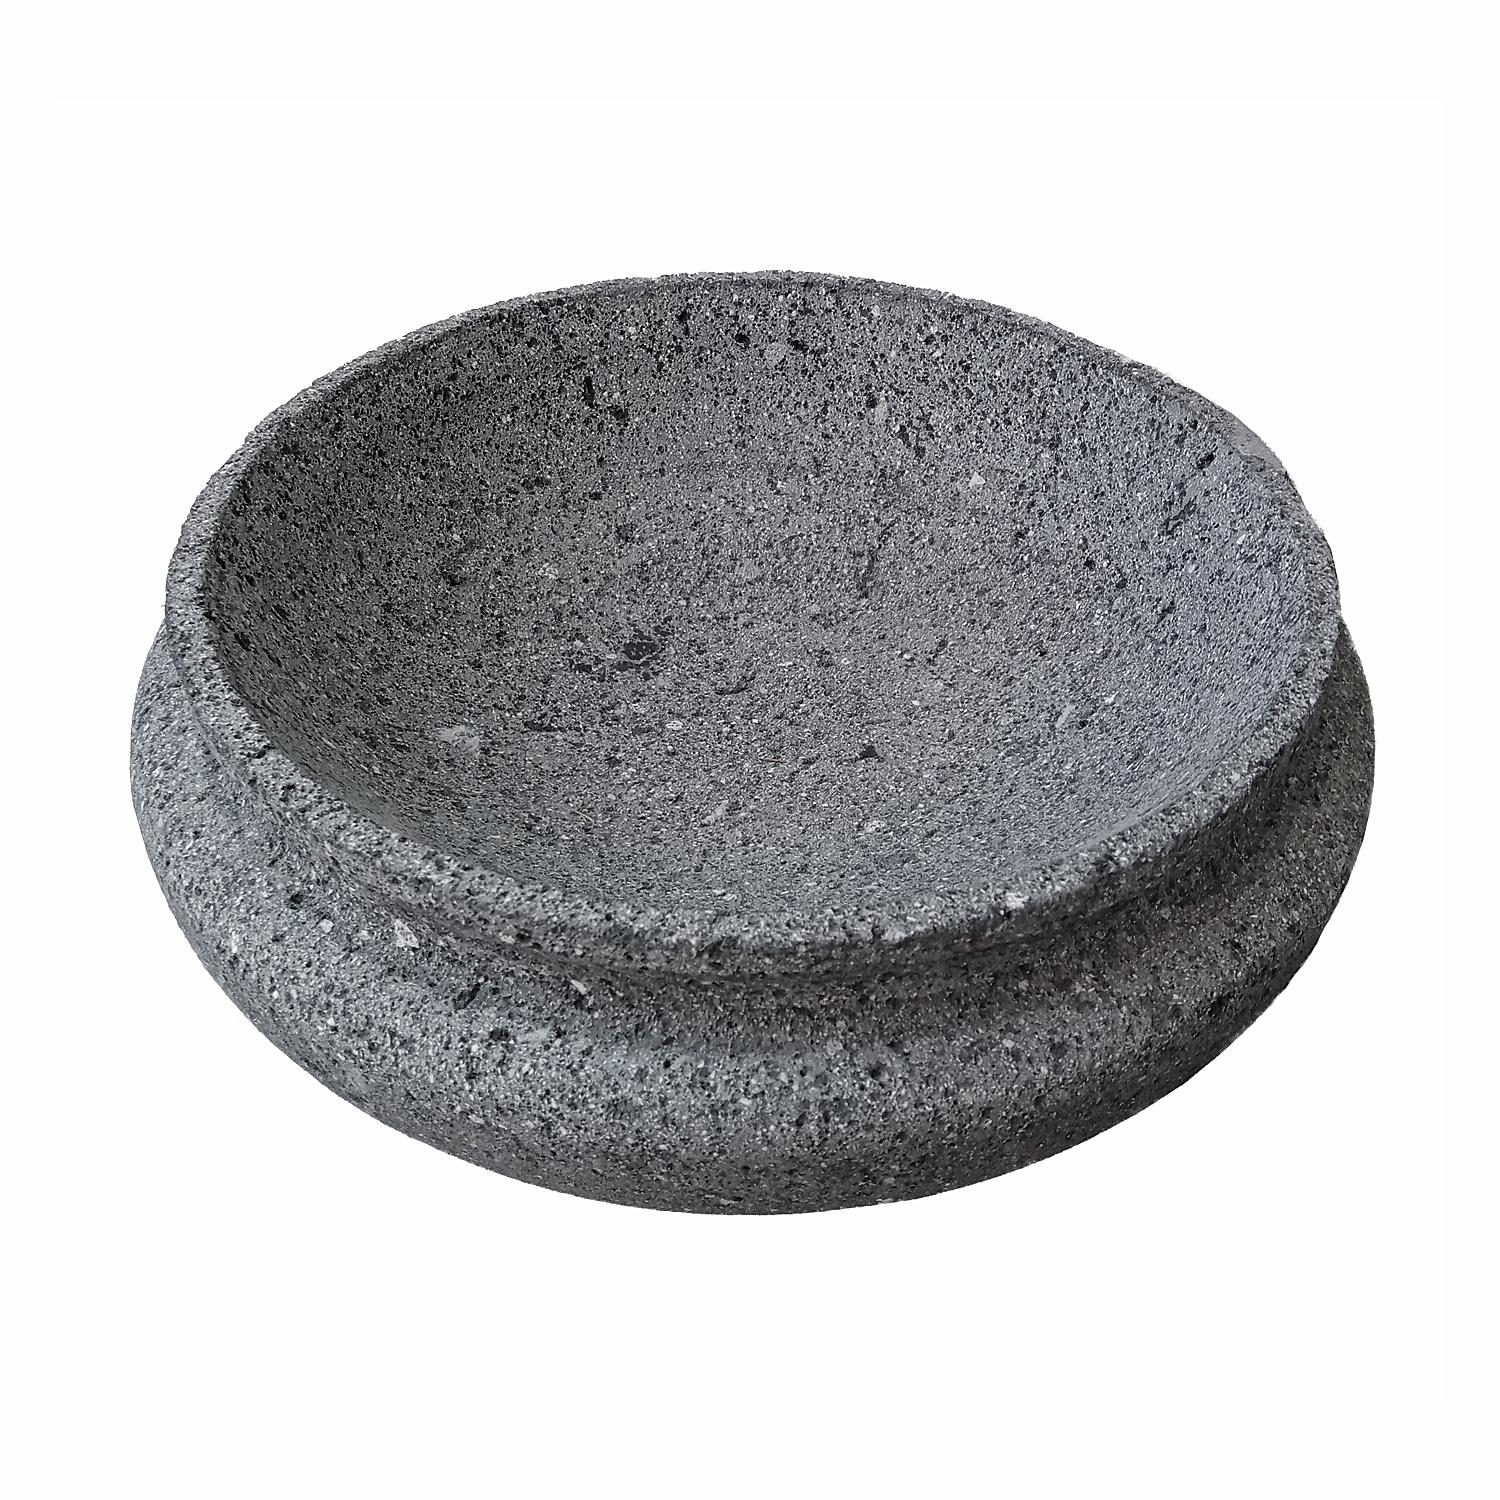 Organic Modern Grey Volcanic Stone Bowl For Sale